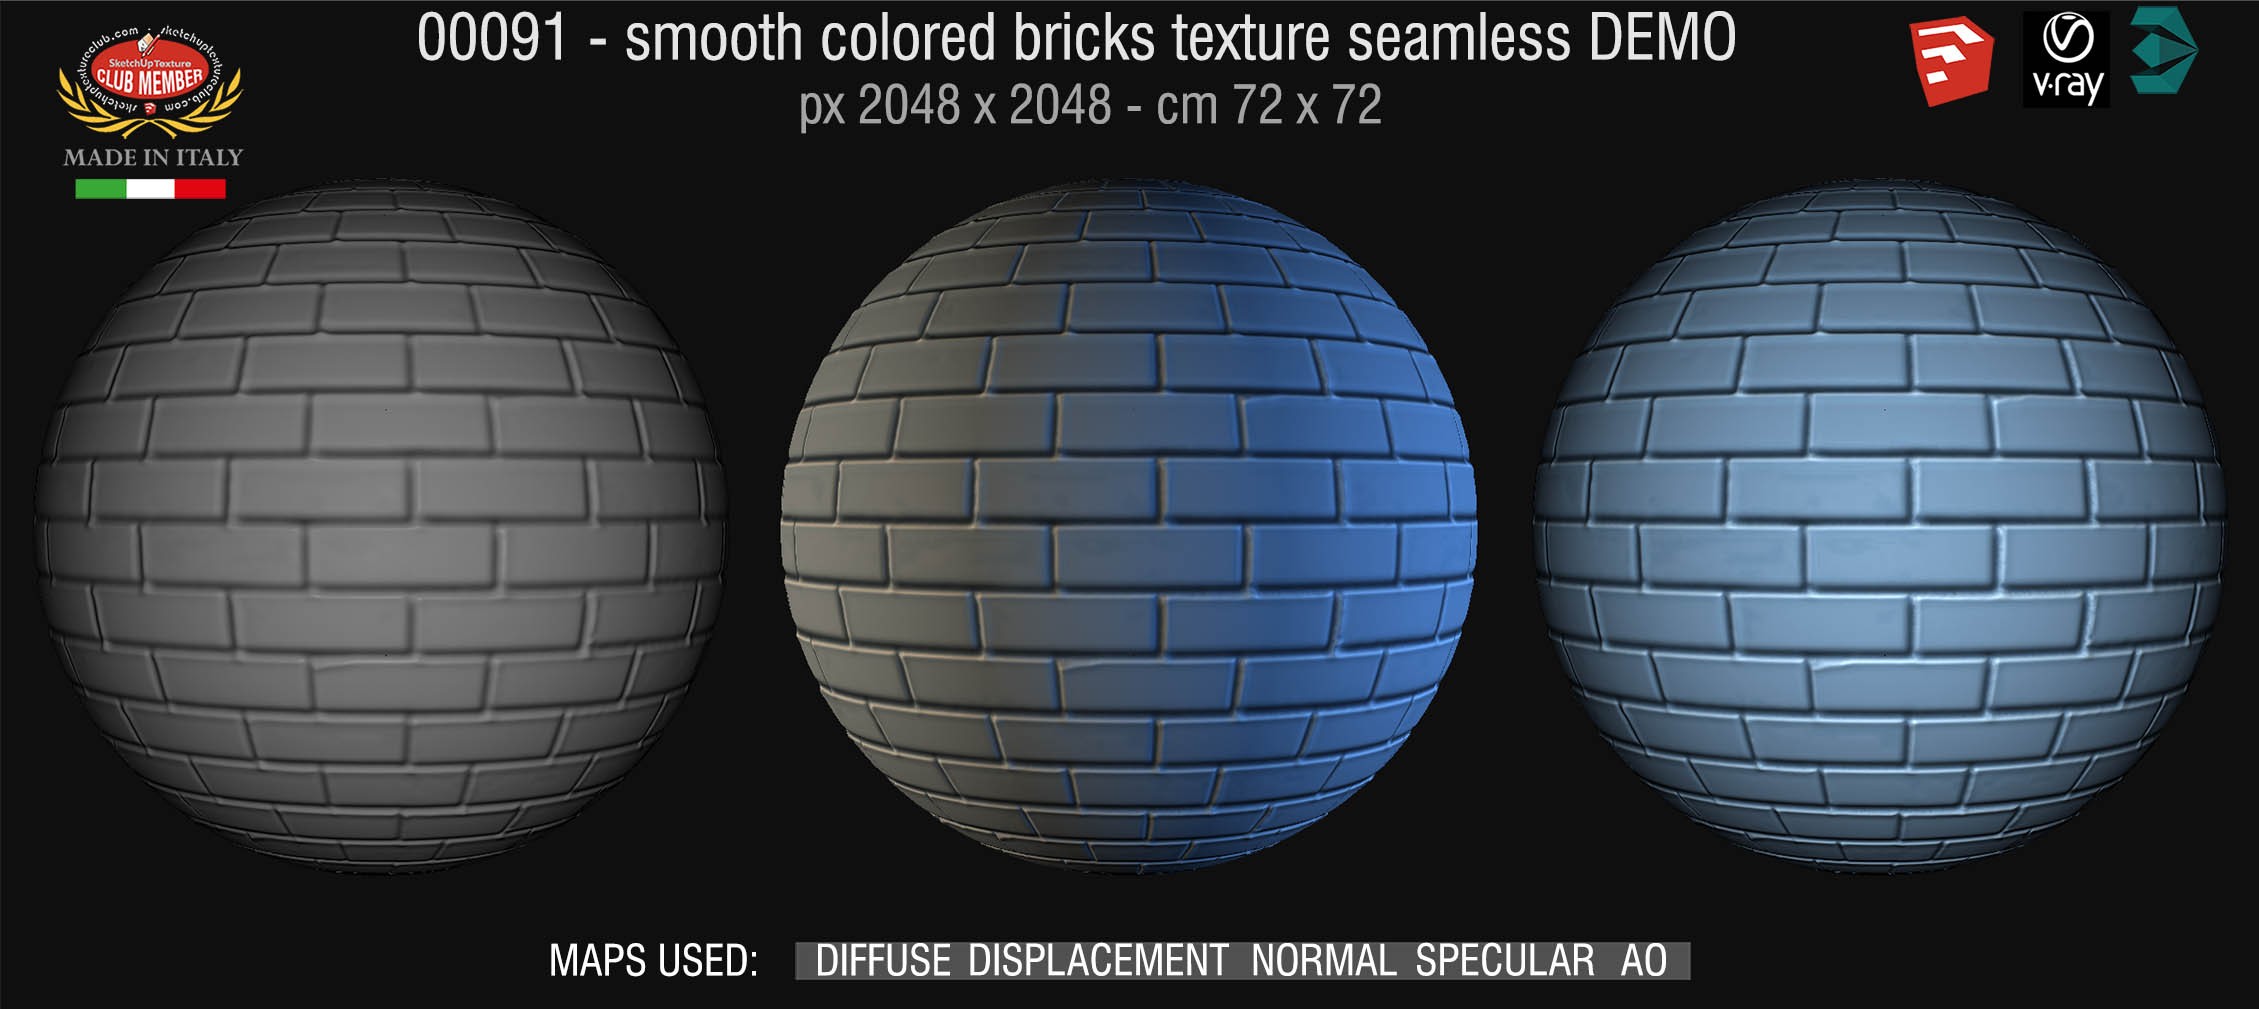 00091 smooth colored bricks texture seamless + maps DEMO